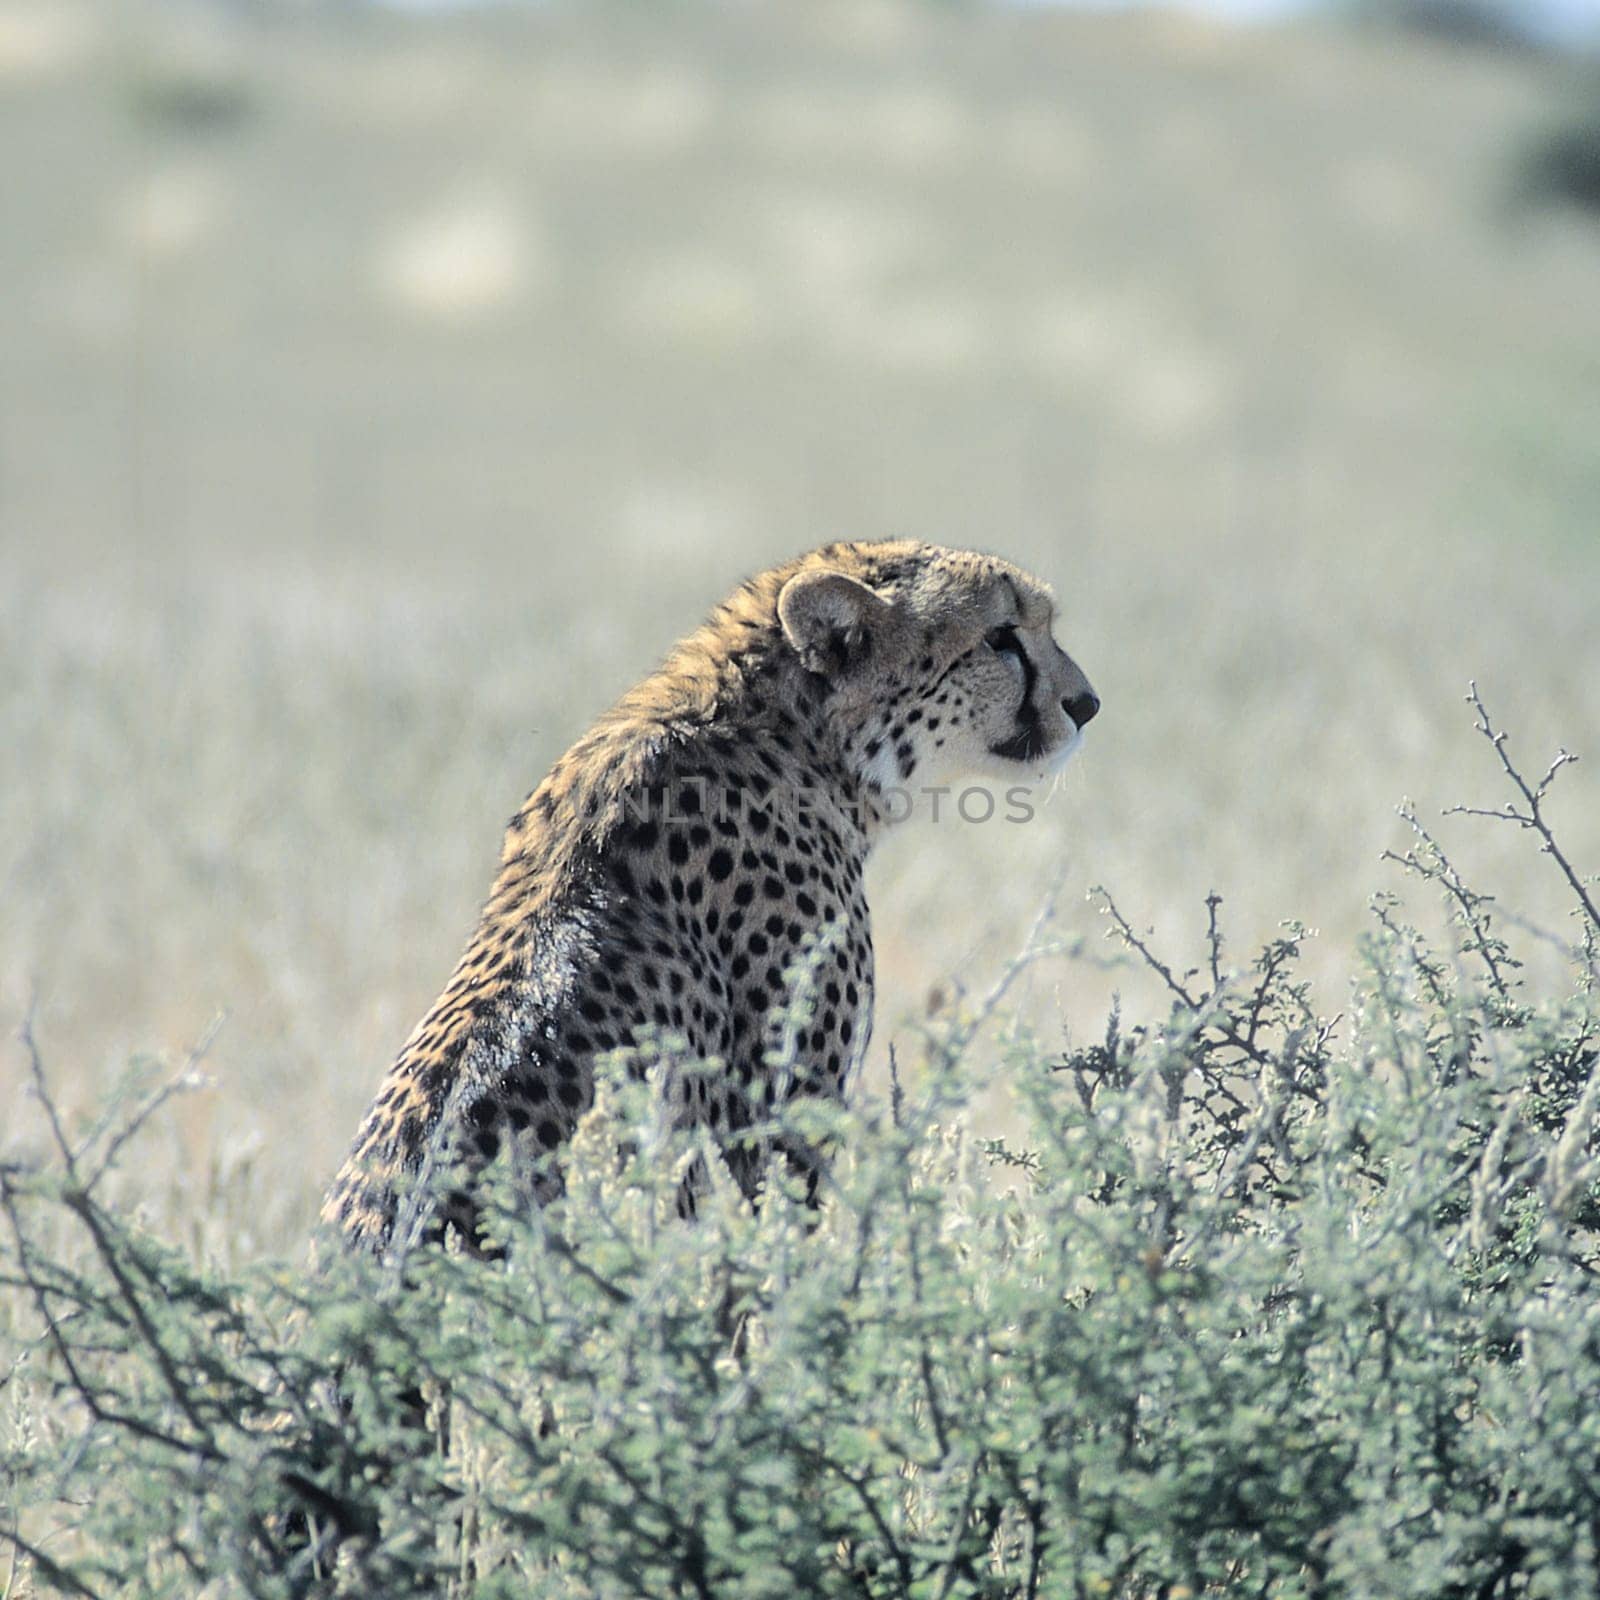 Cheetah by Giamplume